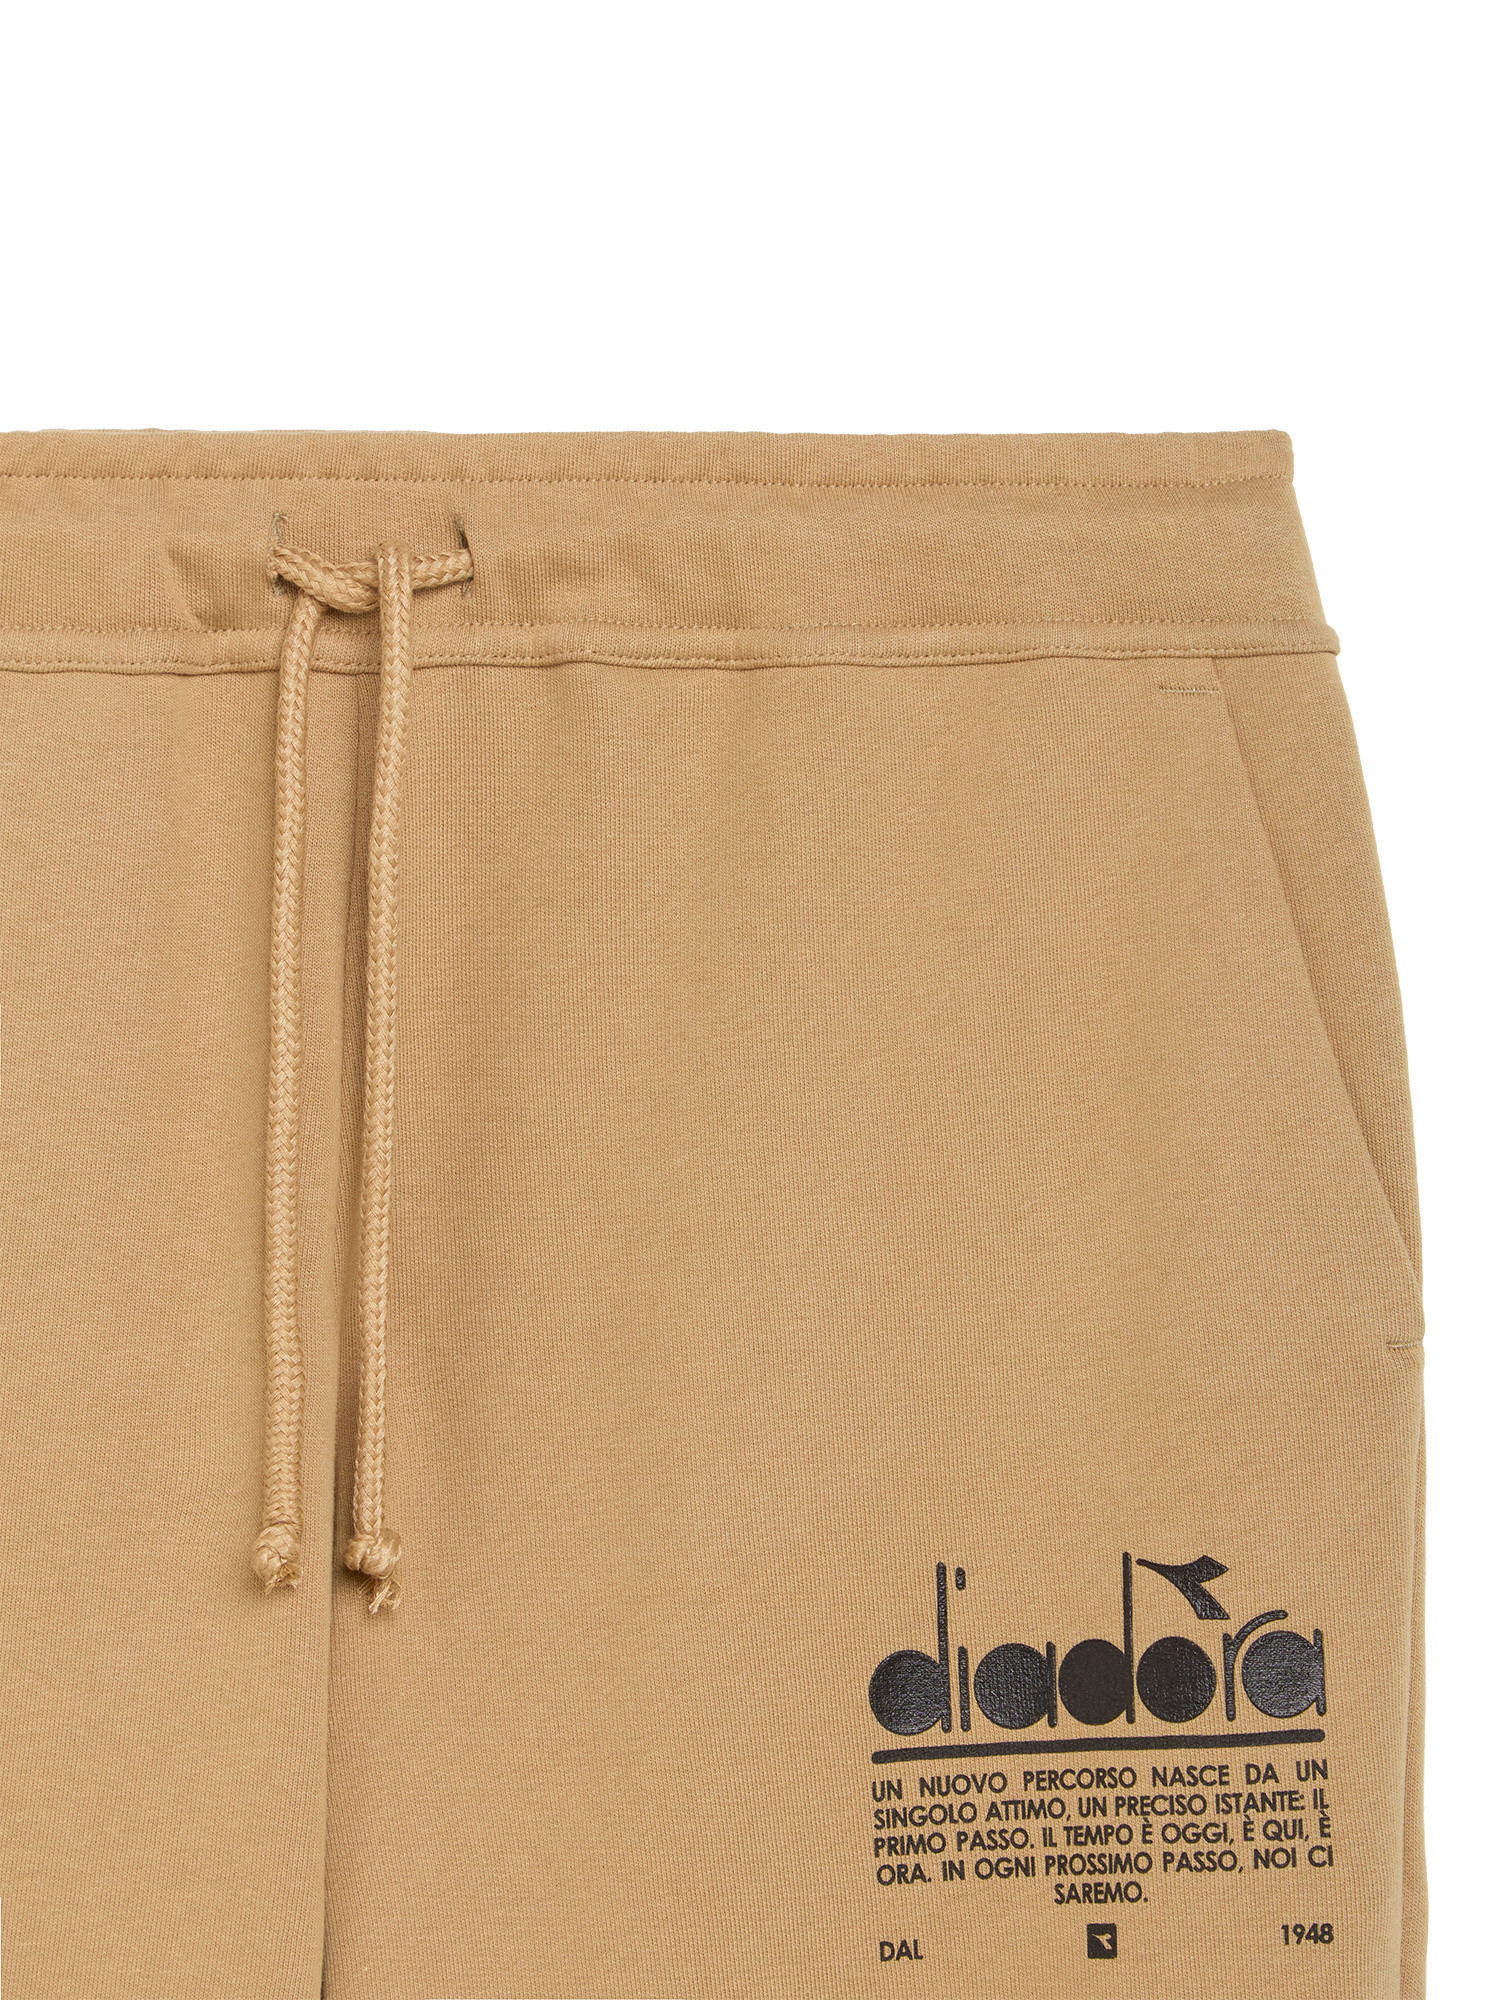 Diadora - Pantalone Manifesto sportivo con stampa in cotone, Beige, large image number 1